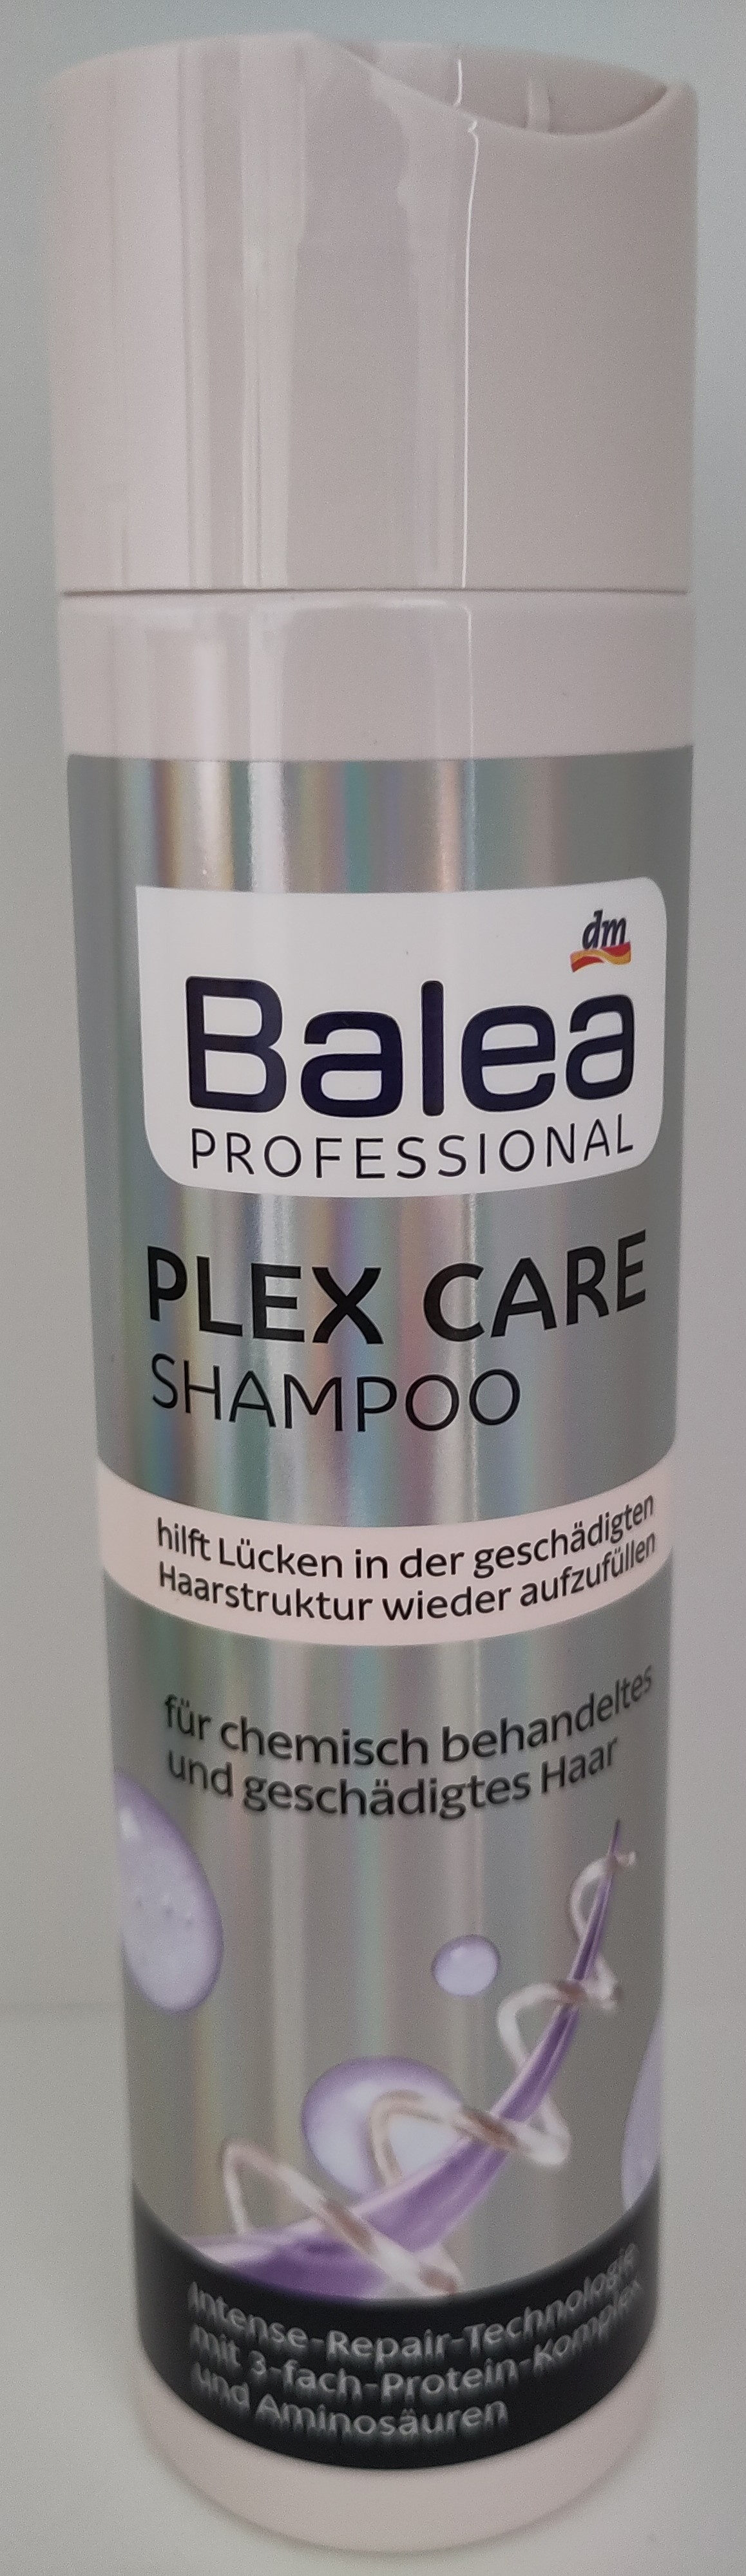 Plex Care Shampoo - Product - de